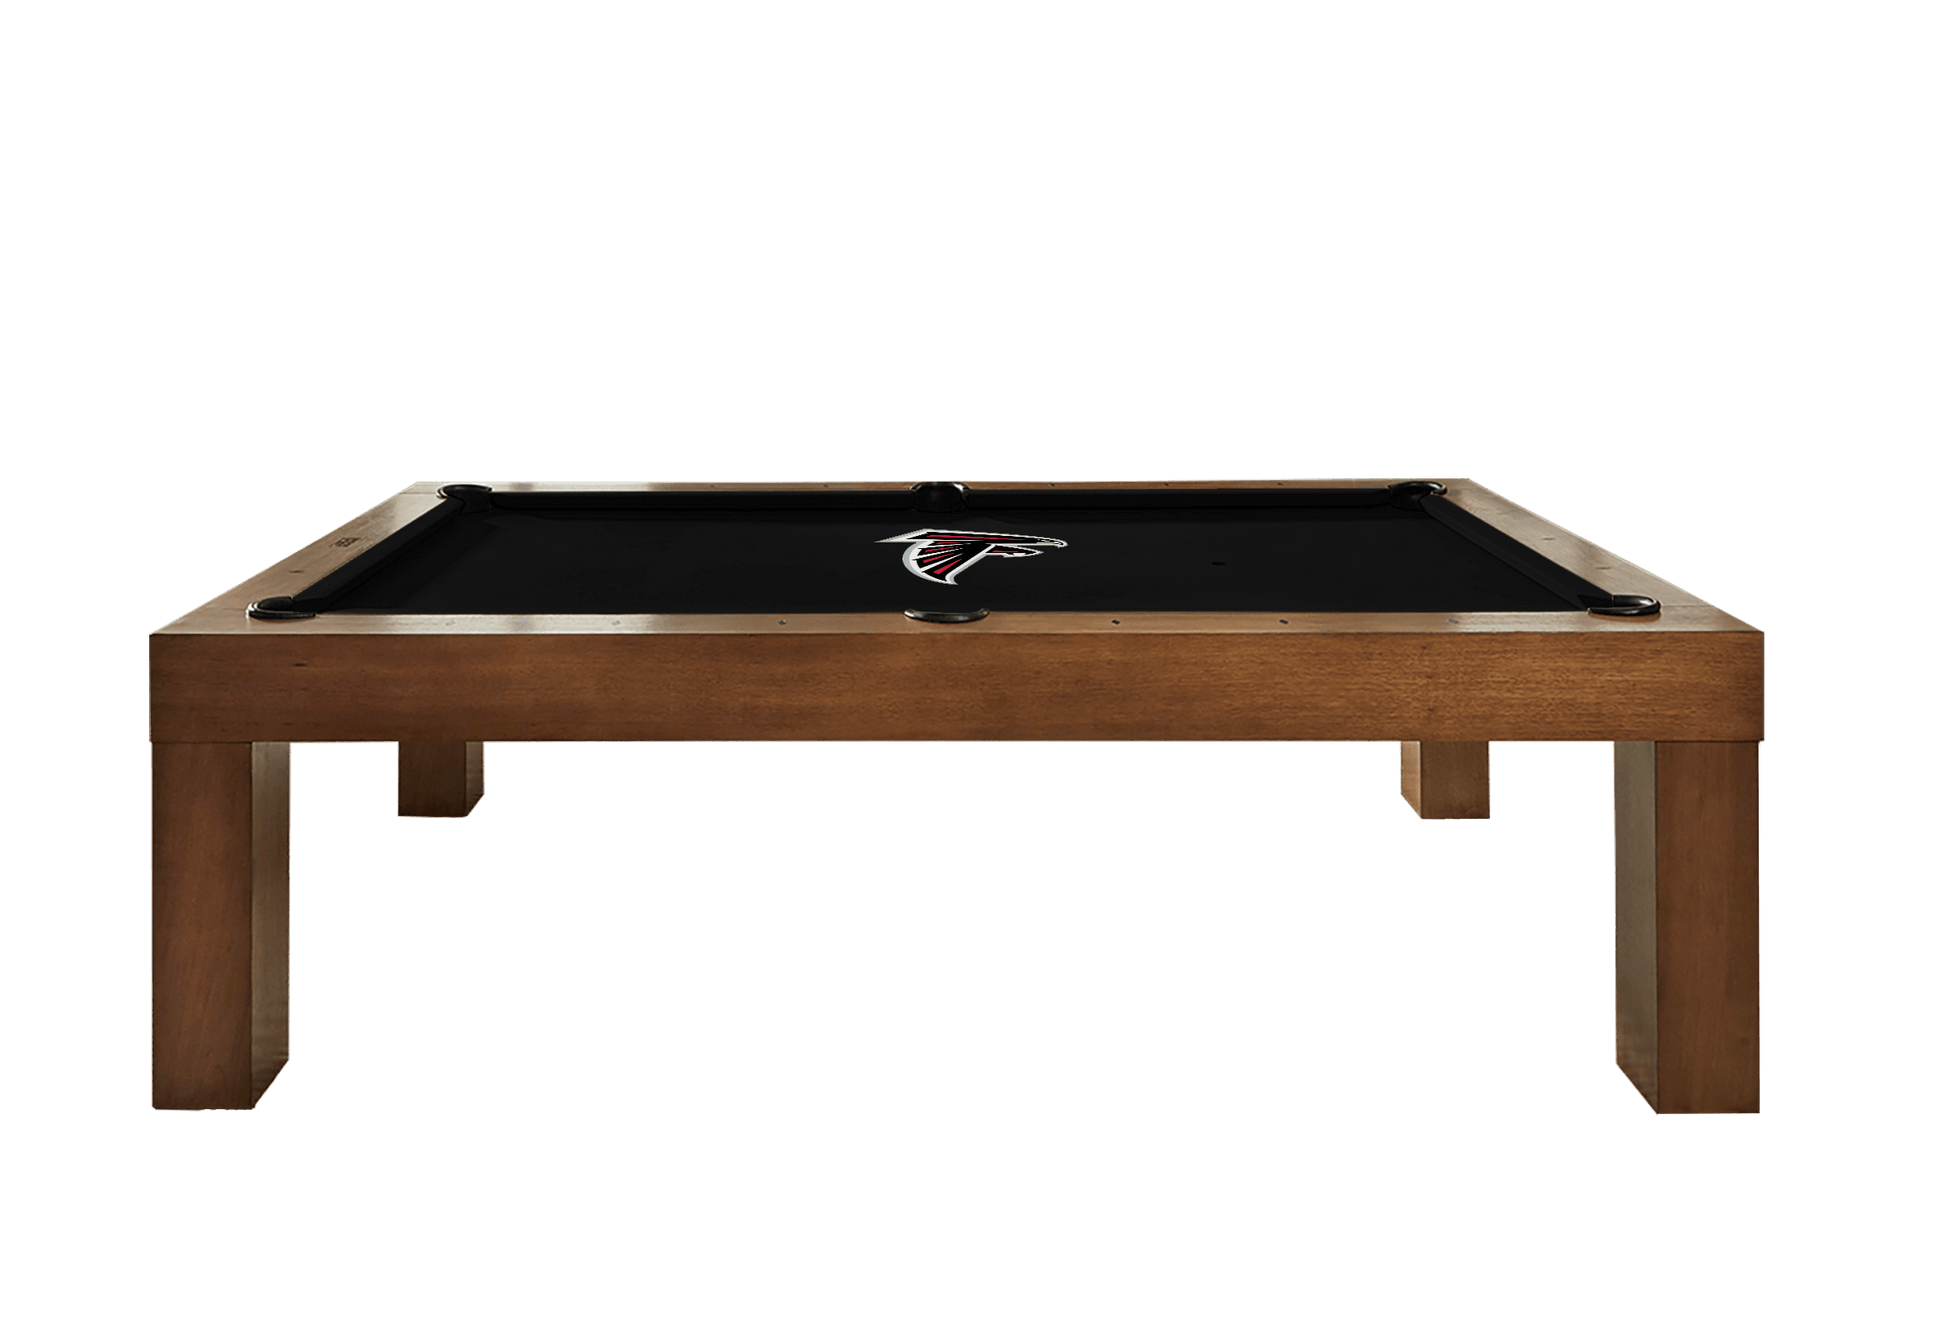 Atlanta Falcons Premium Pool Table Bundle - Walnut Pool Bundle Home Arcade Games   